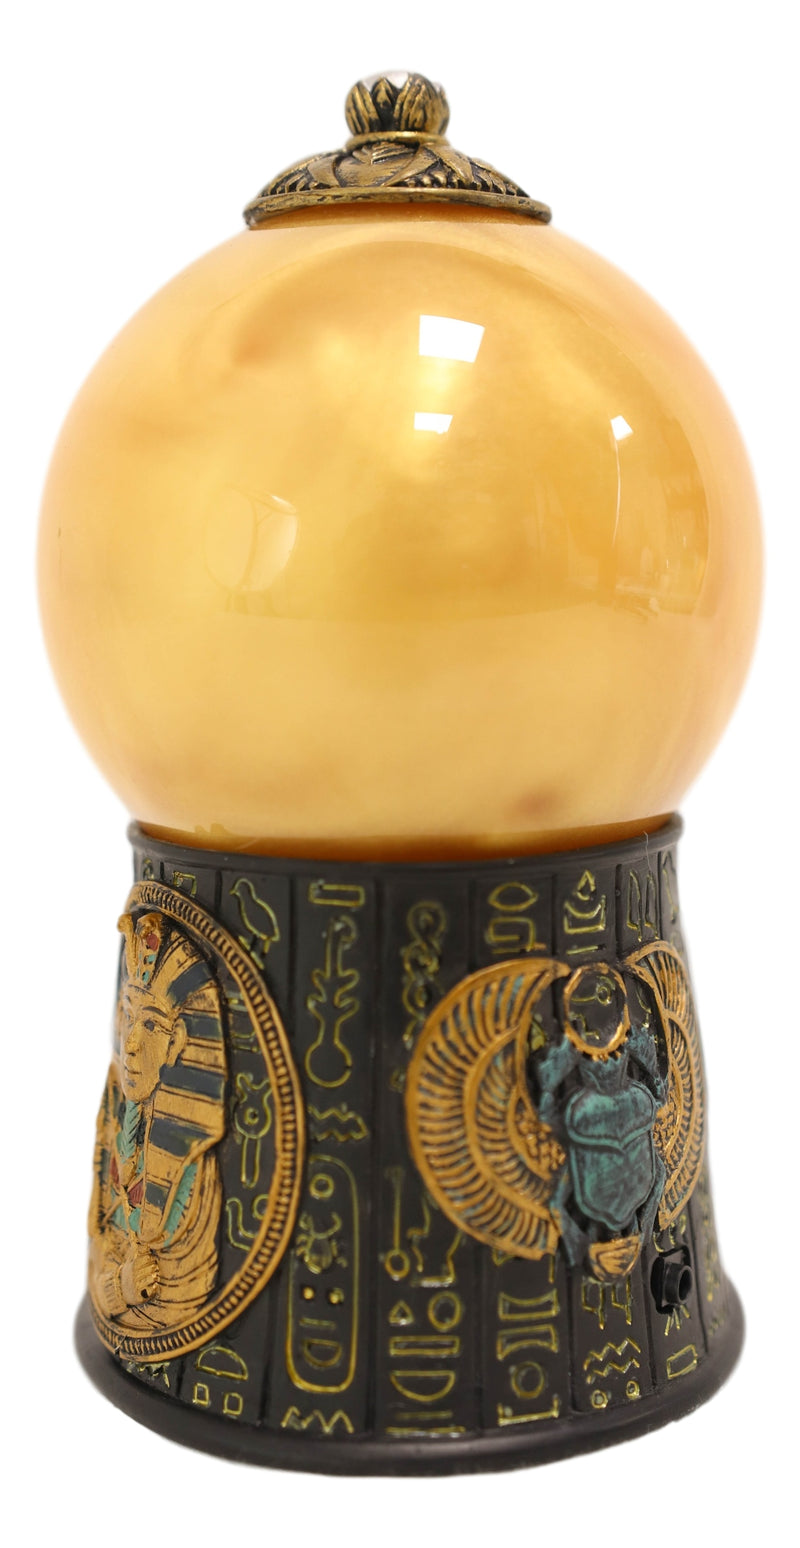 Pharaoh King Tut Ruler of Egypt Hieroglyphic Golden Sandstorm Gazing Ball Statue